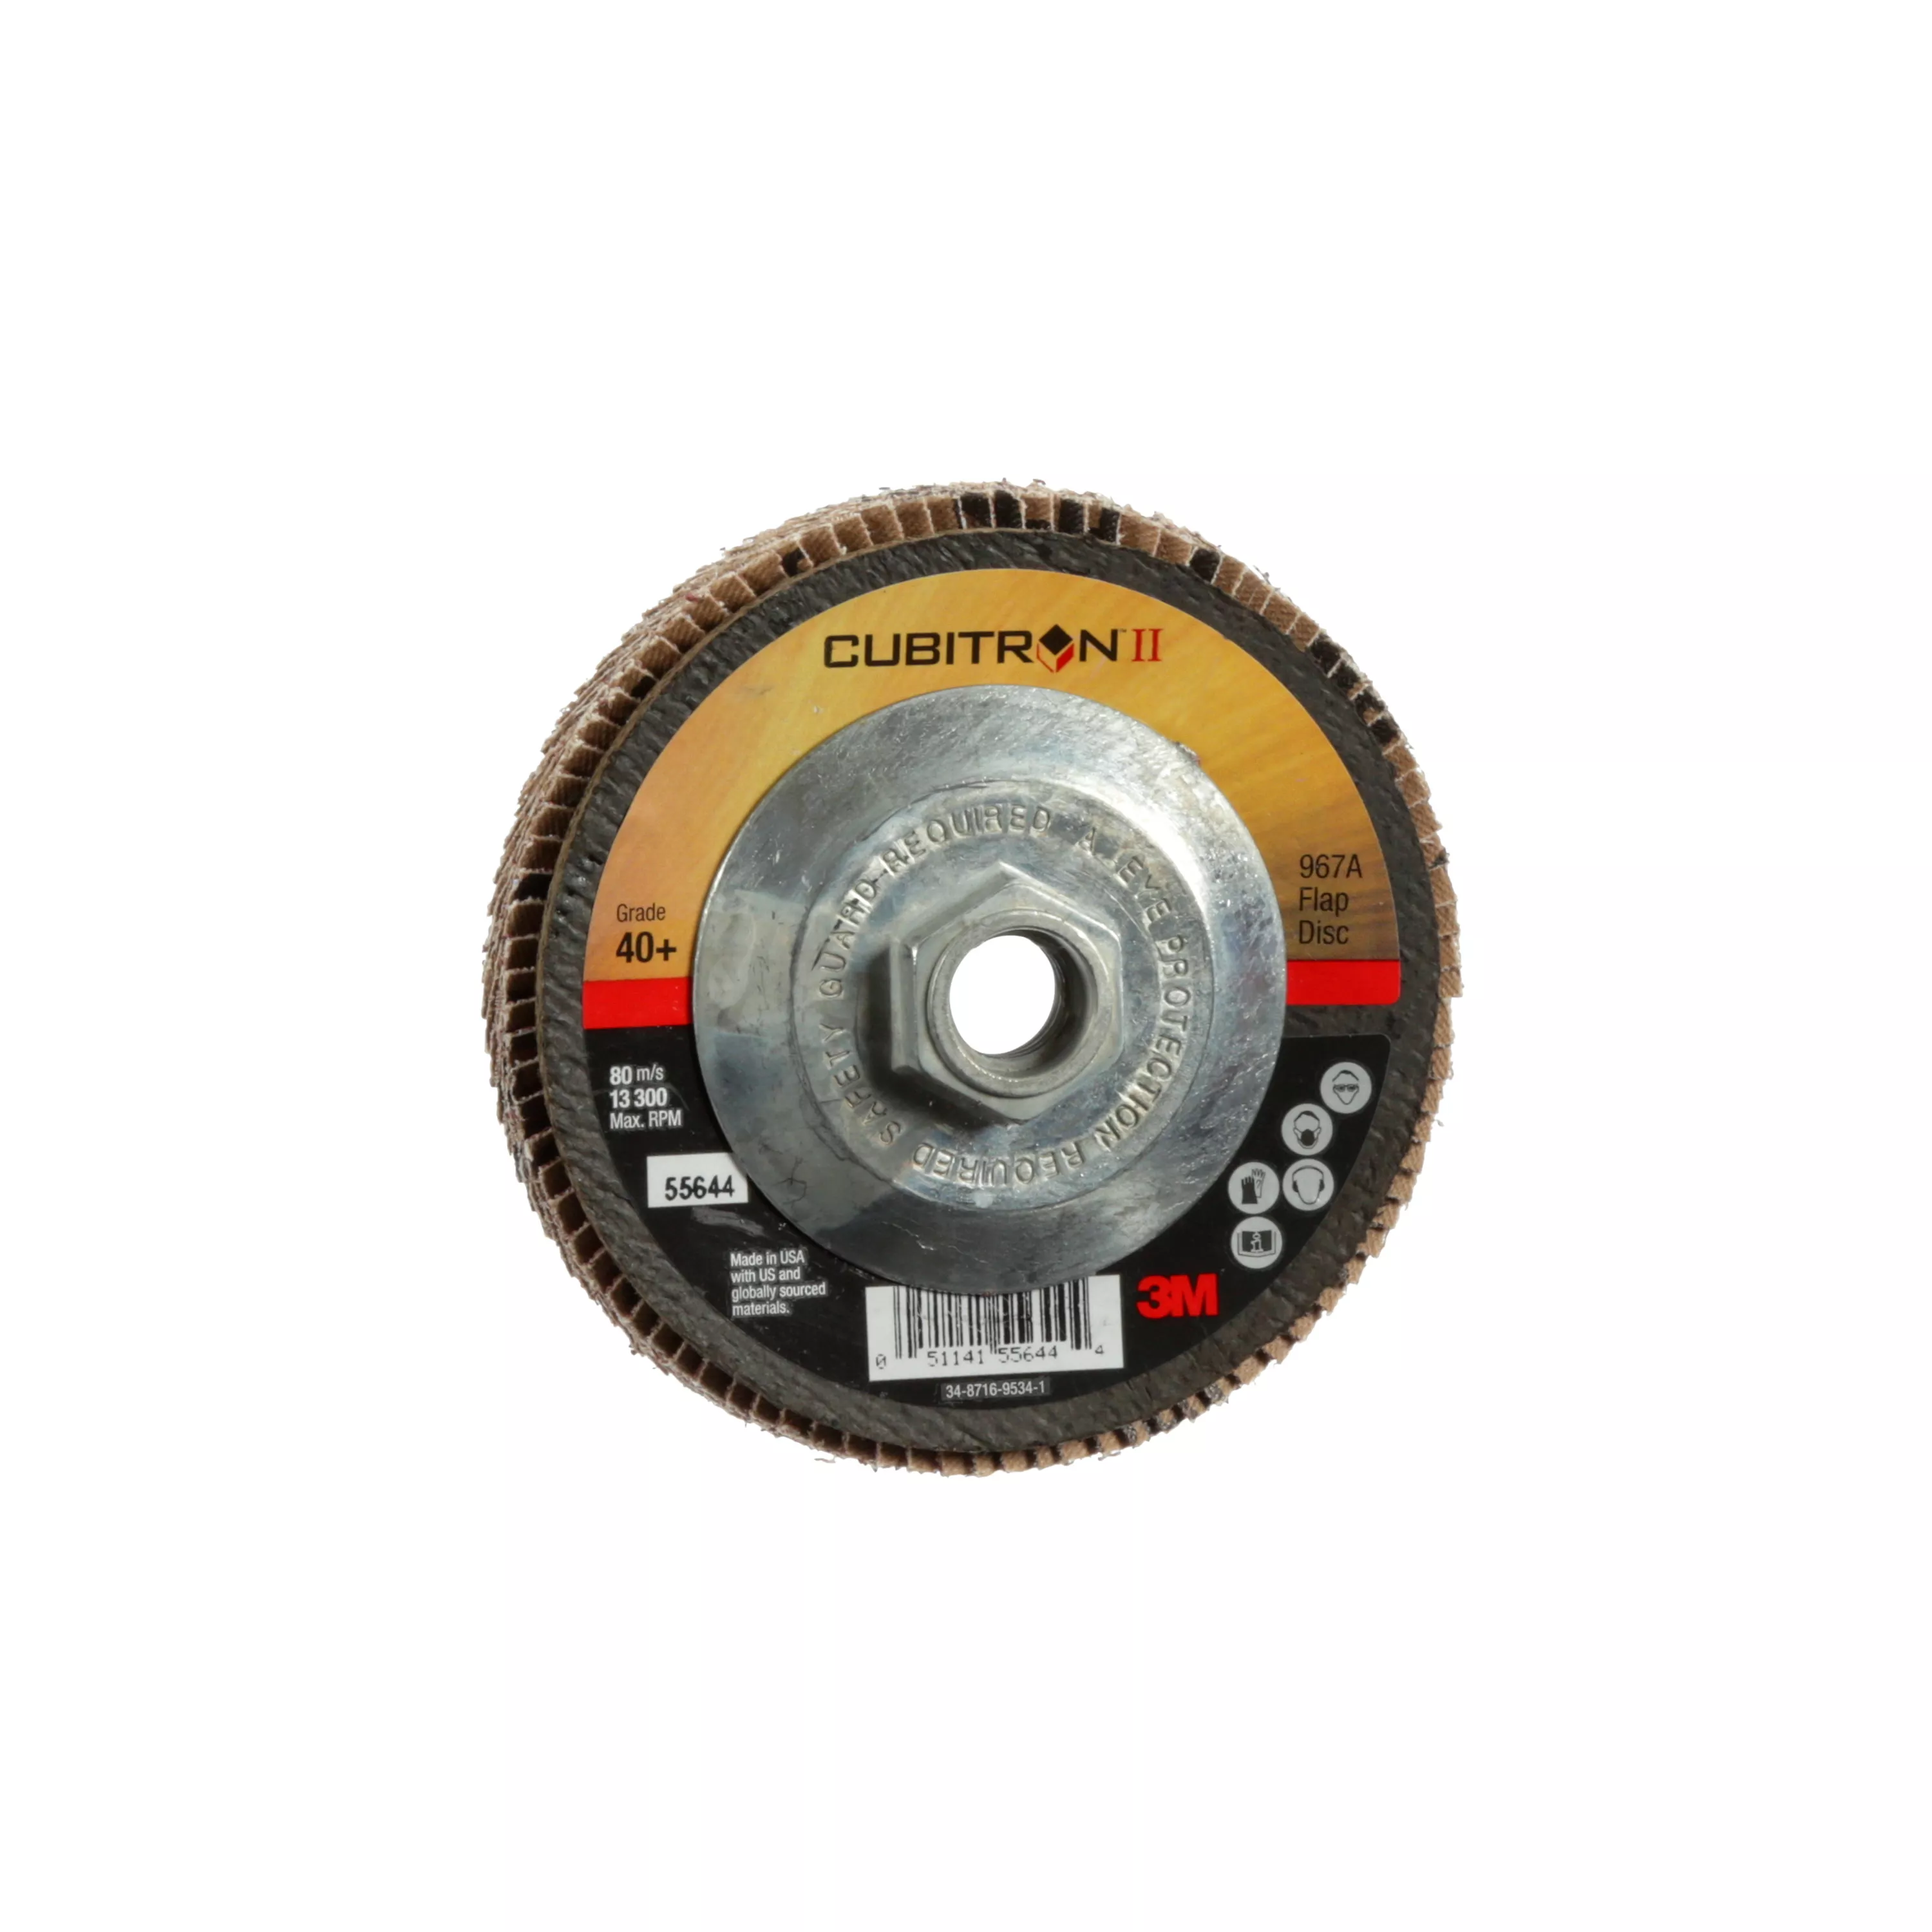 SKU 7010363306 | 3M™ Cubitron™ II Flap Disc 967A